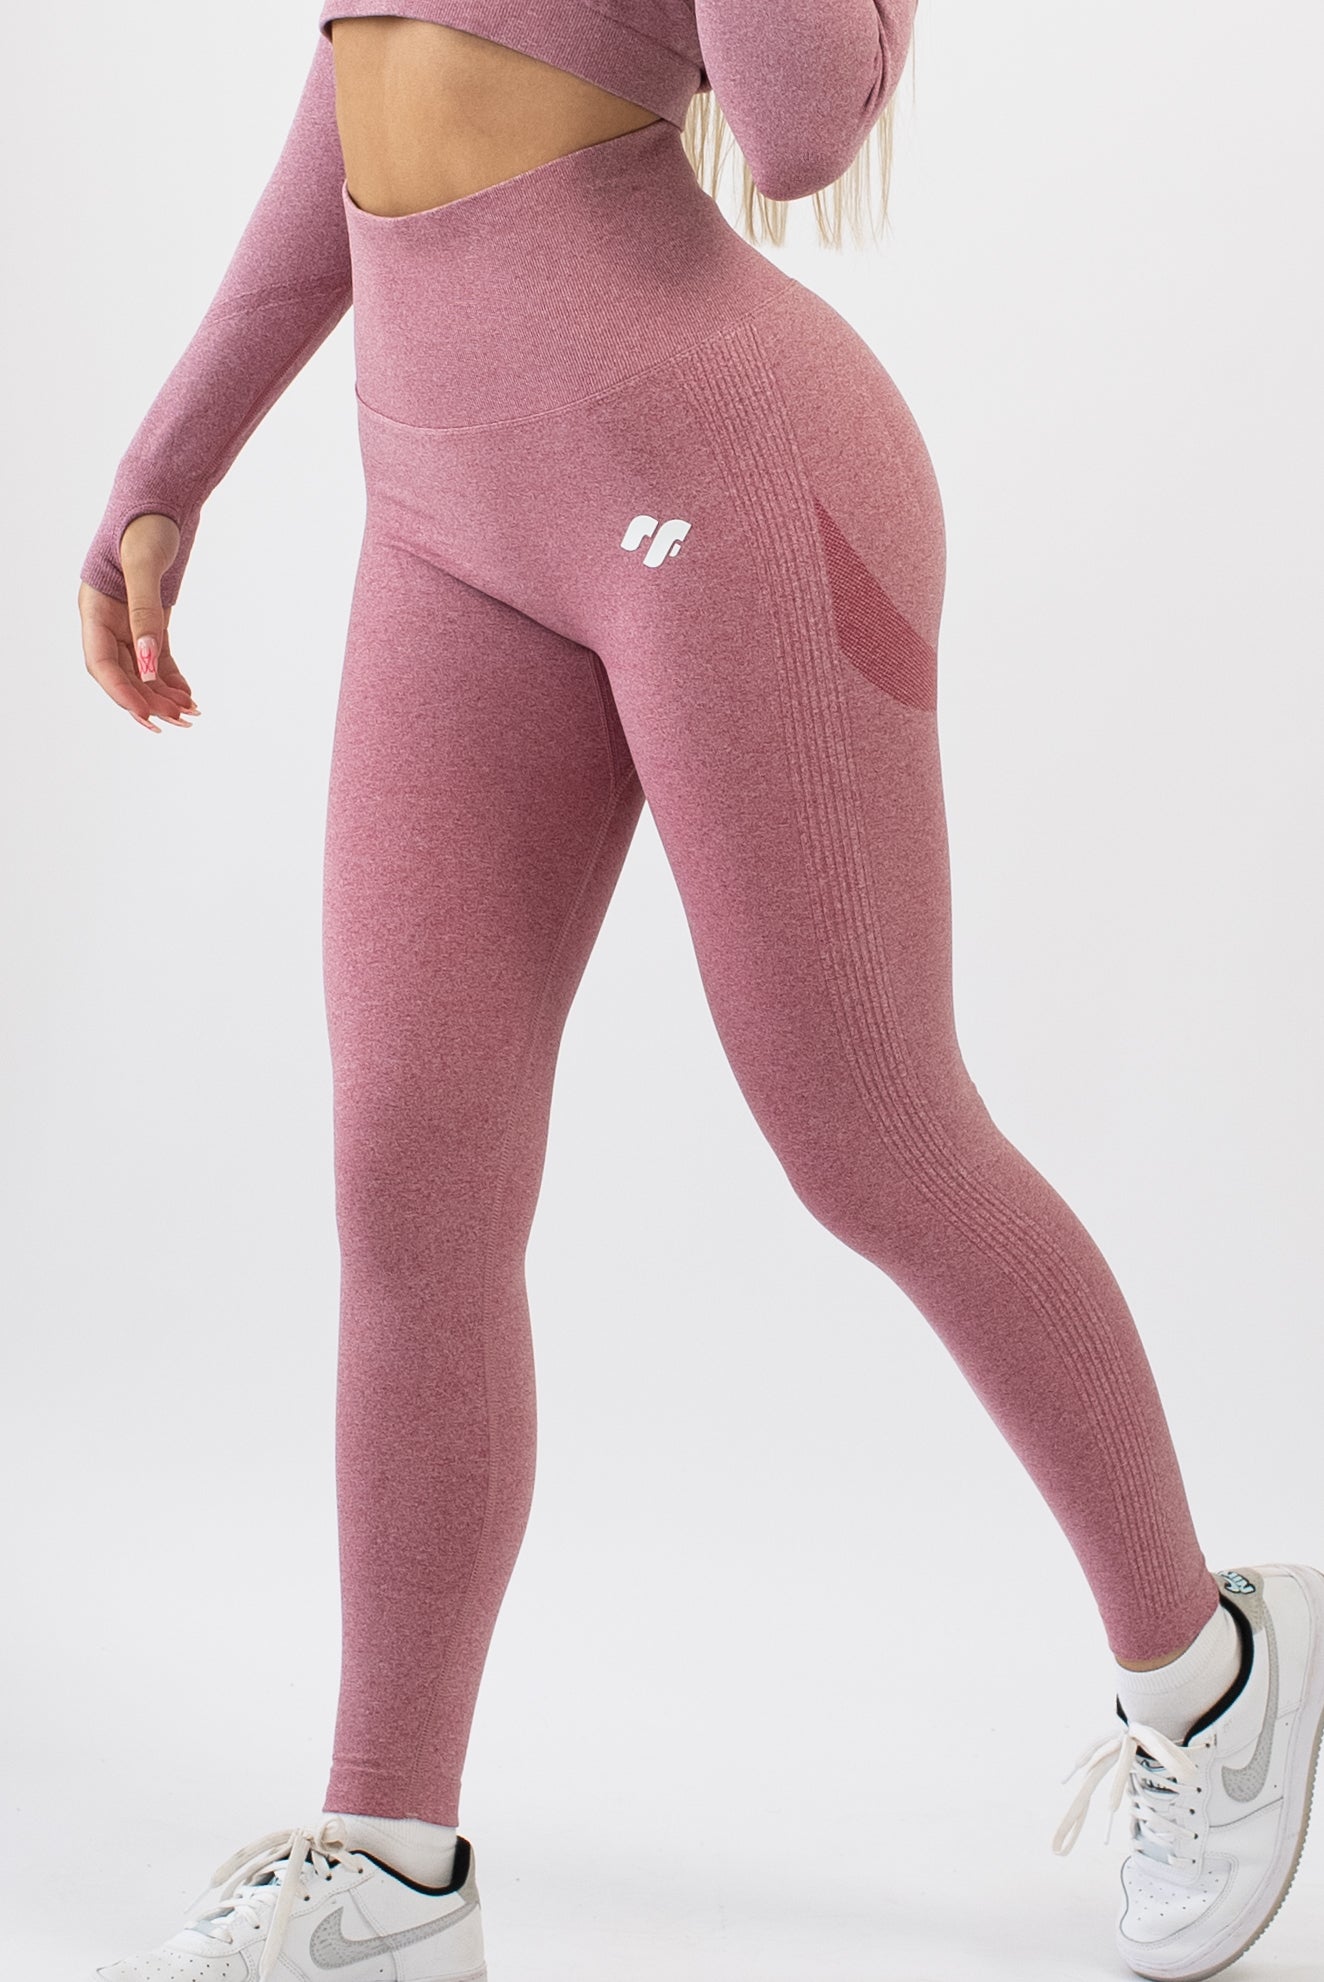 Gymshark Vital Seamless 2.0 Shorts Pink Marl, Women's Fashion